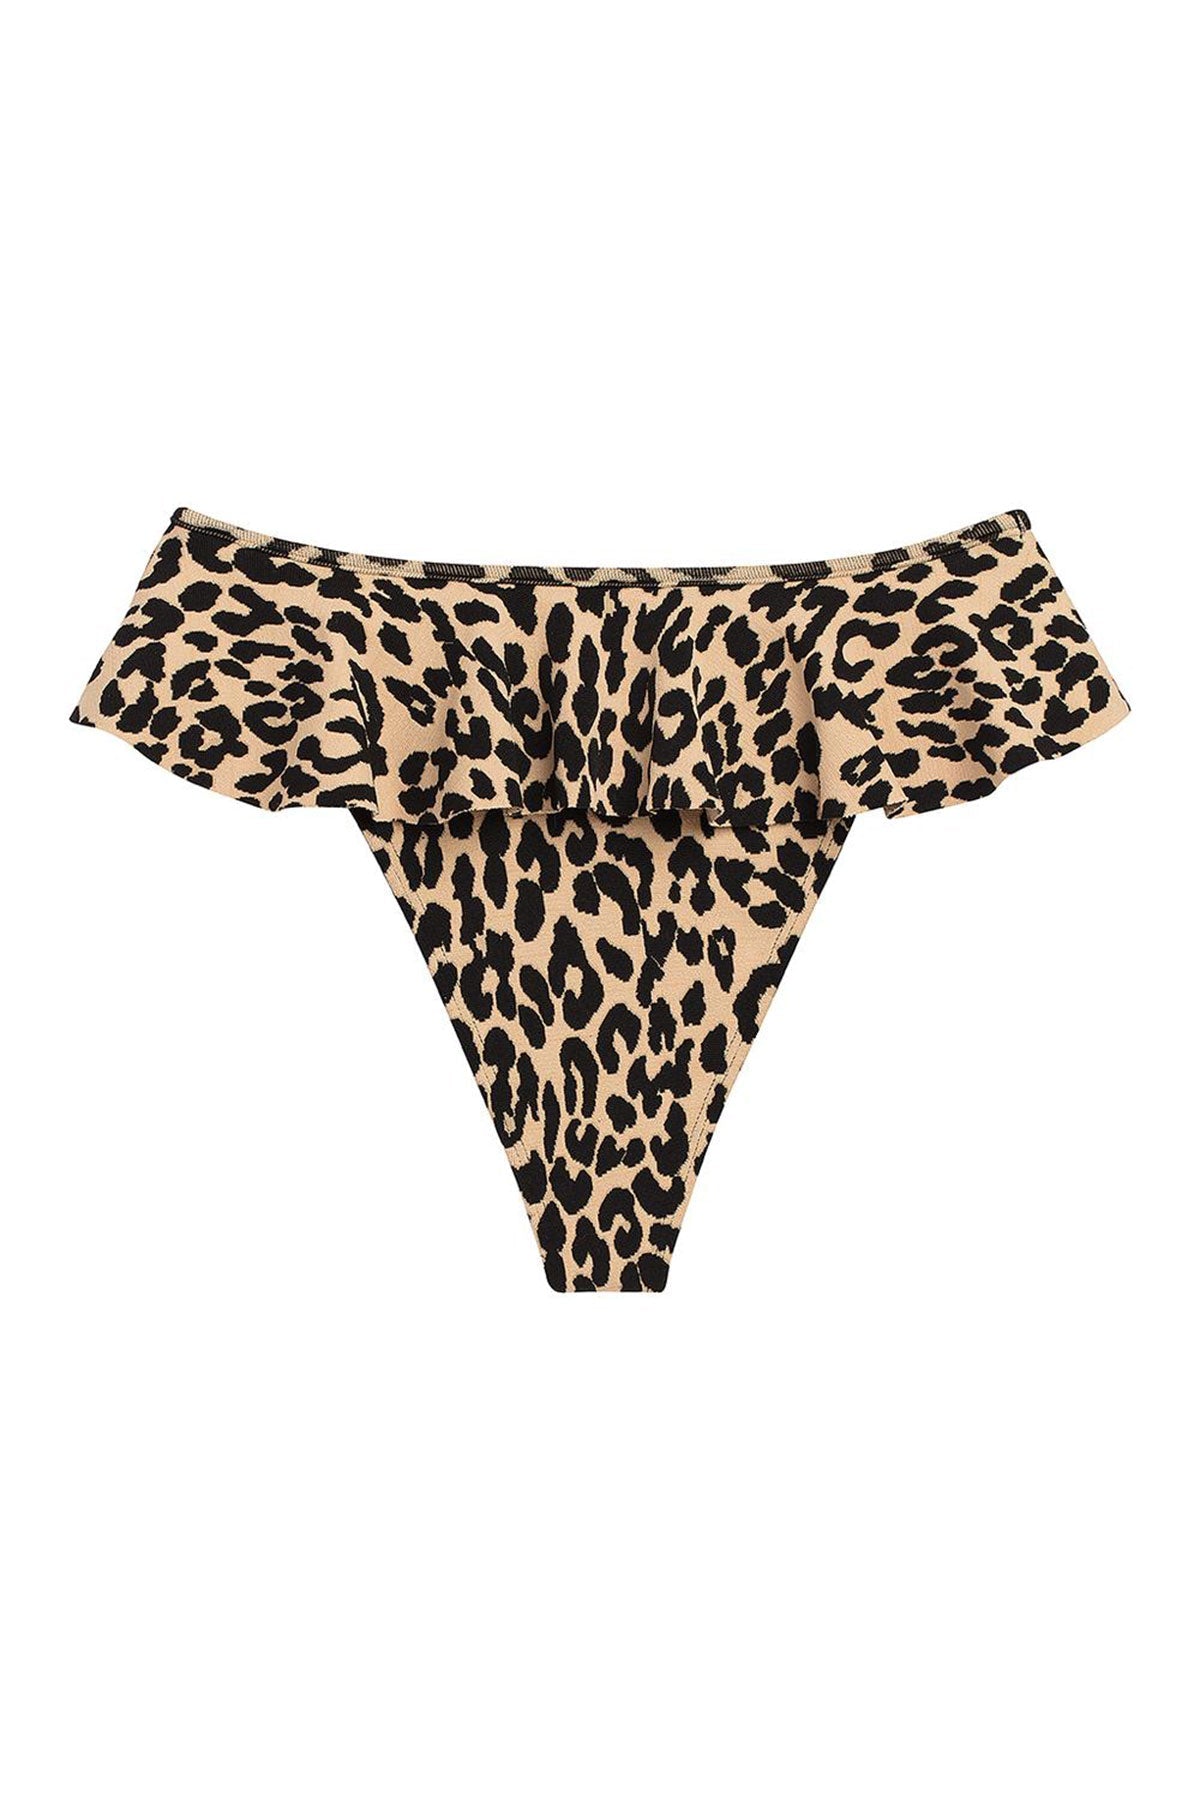 Leopard Texture Tamarindo Ruffle Bikini Bottom - shop-olivia.com